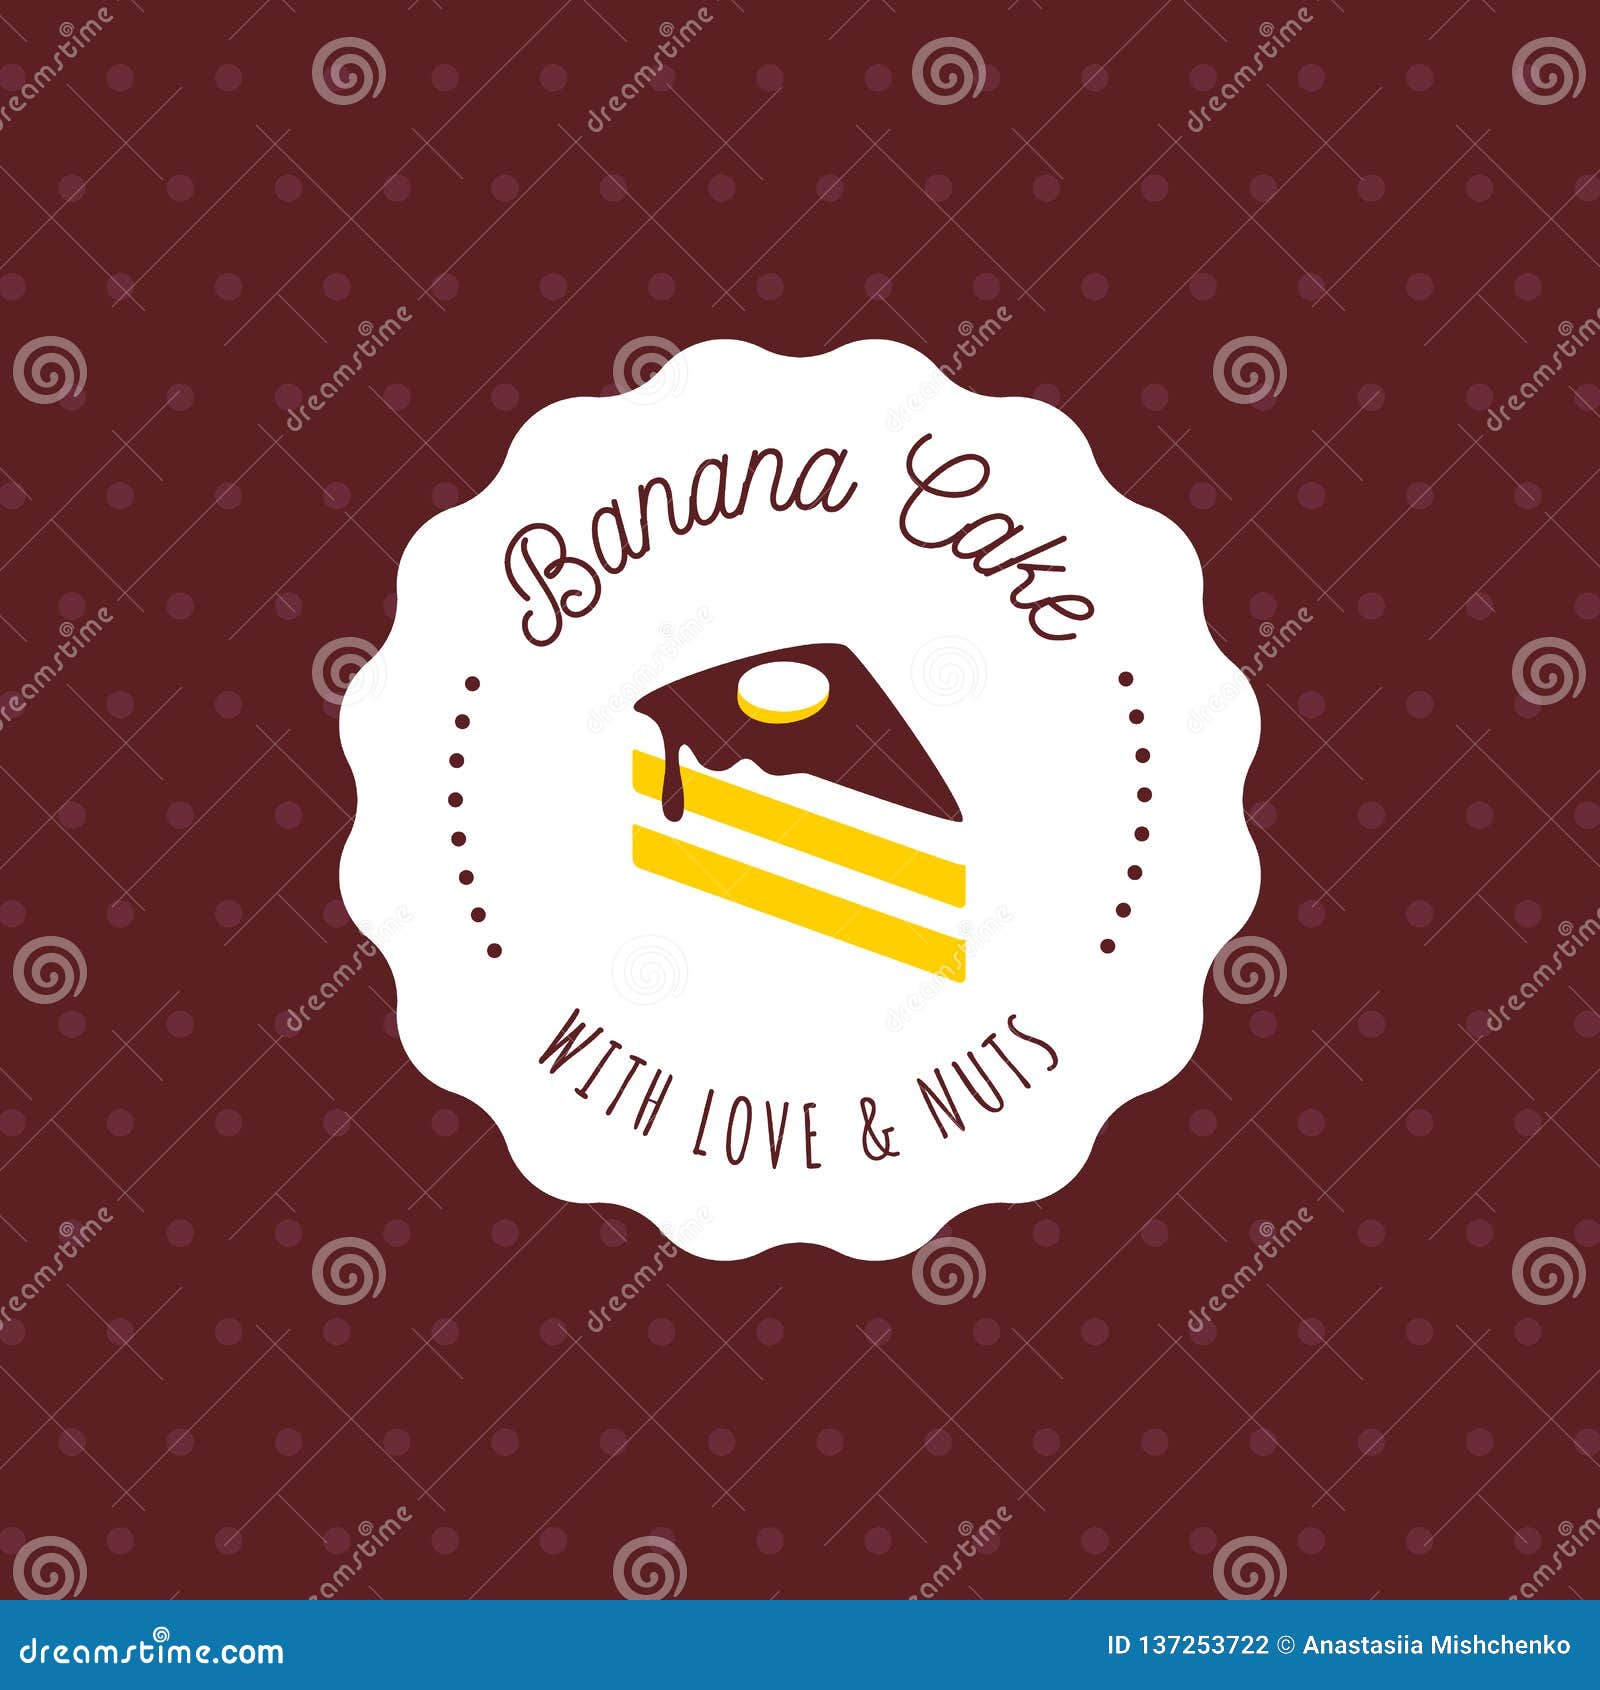 Cake Vector Logo in Vintage Style. Dessert Illustration. Bakery For Dessert Labels Template